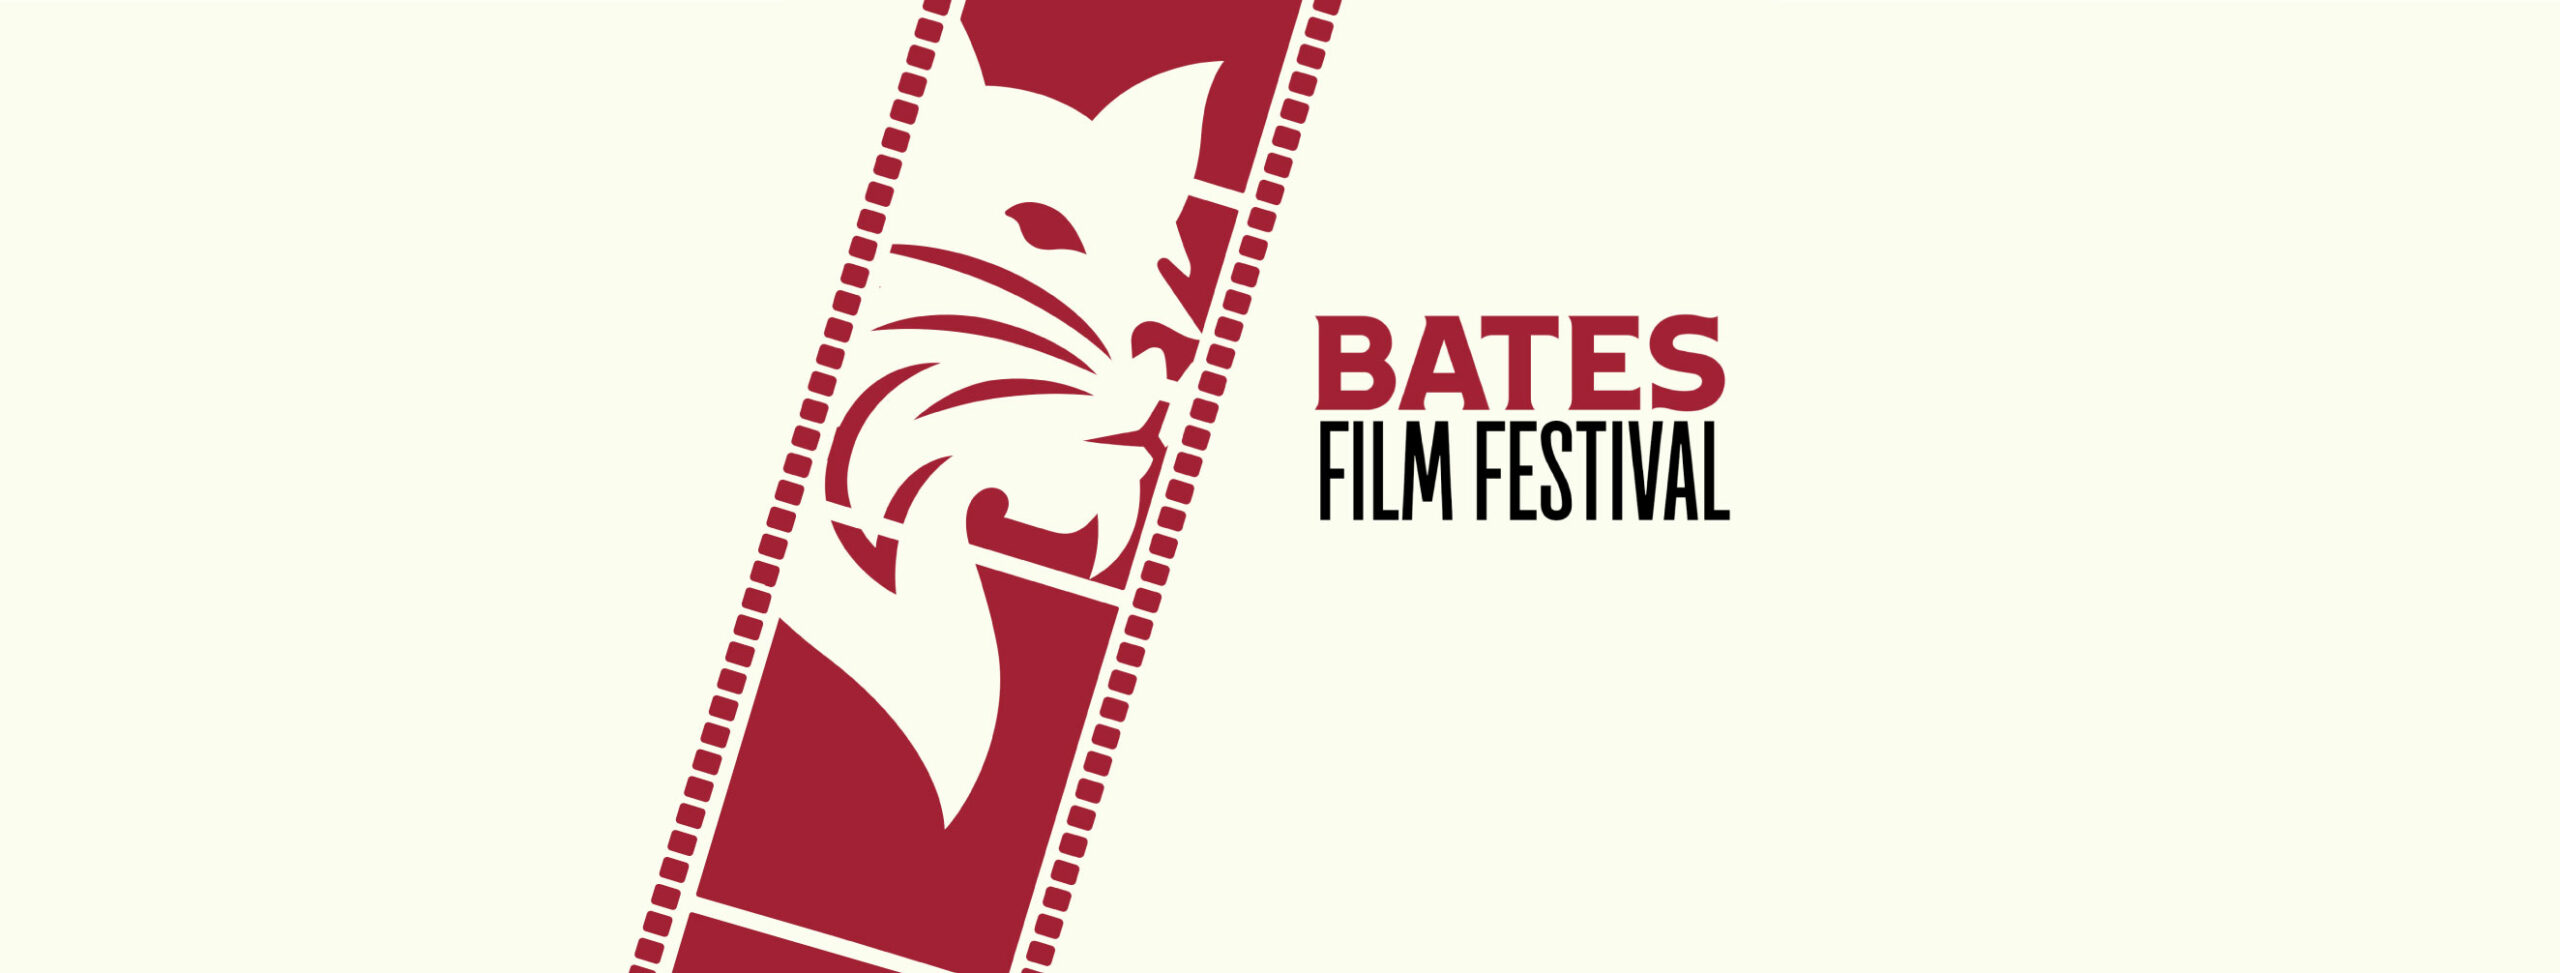 Bates Film Festival Logo in a banner